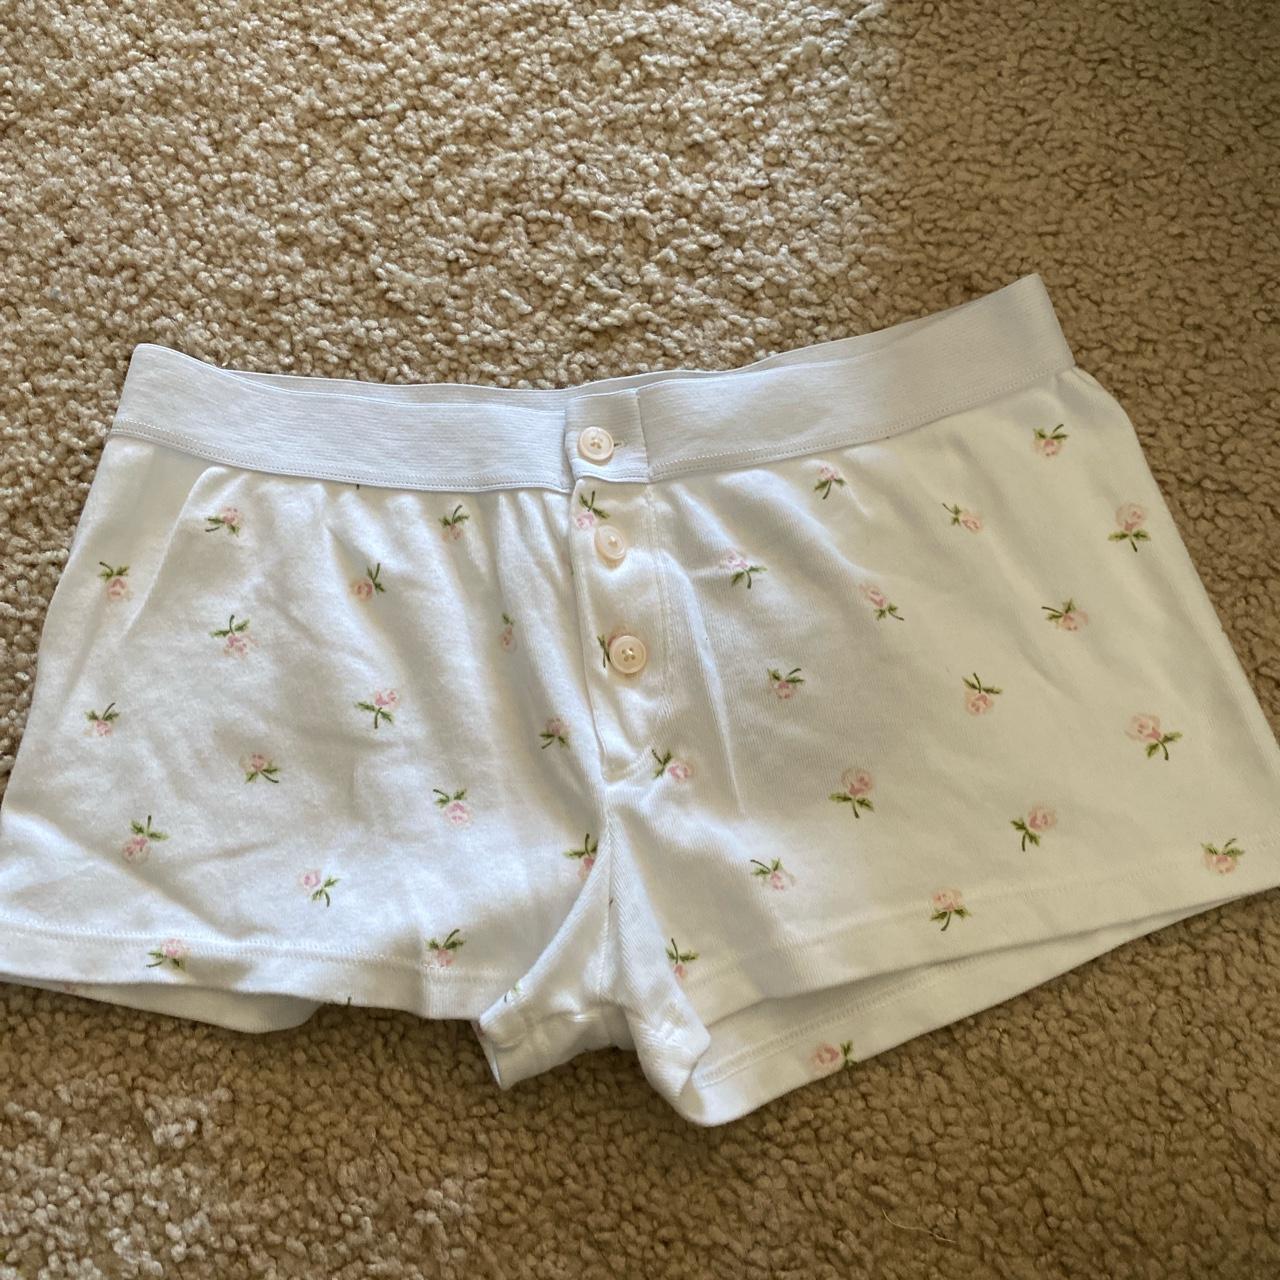 Brandy melville floral boy shorts - Depop